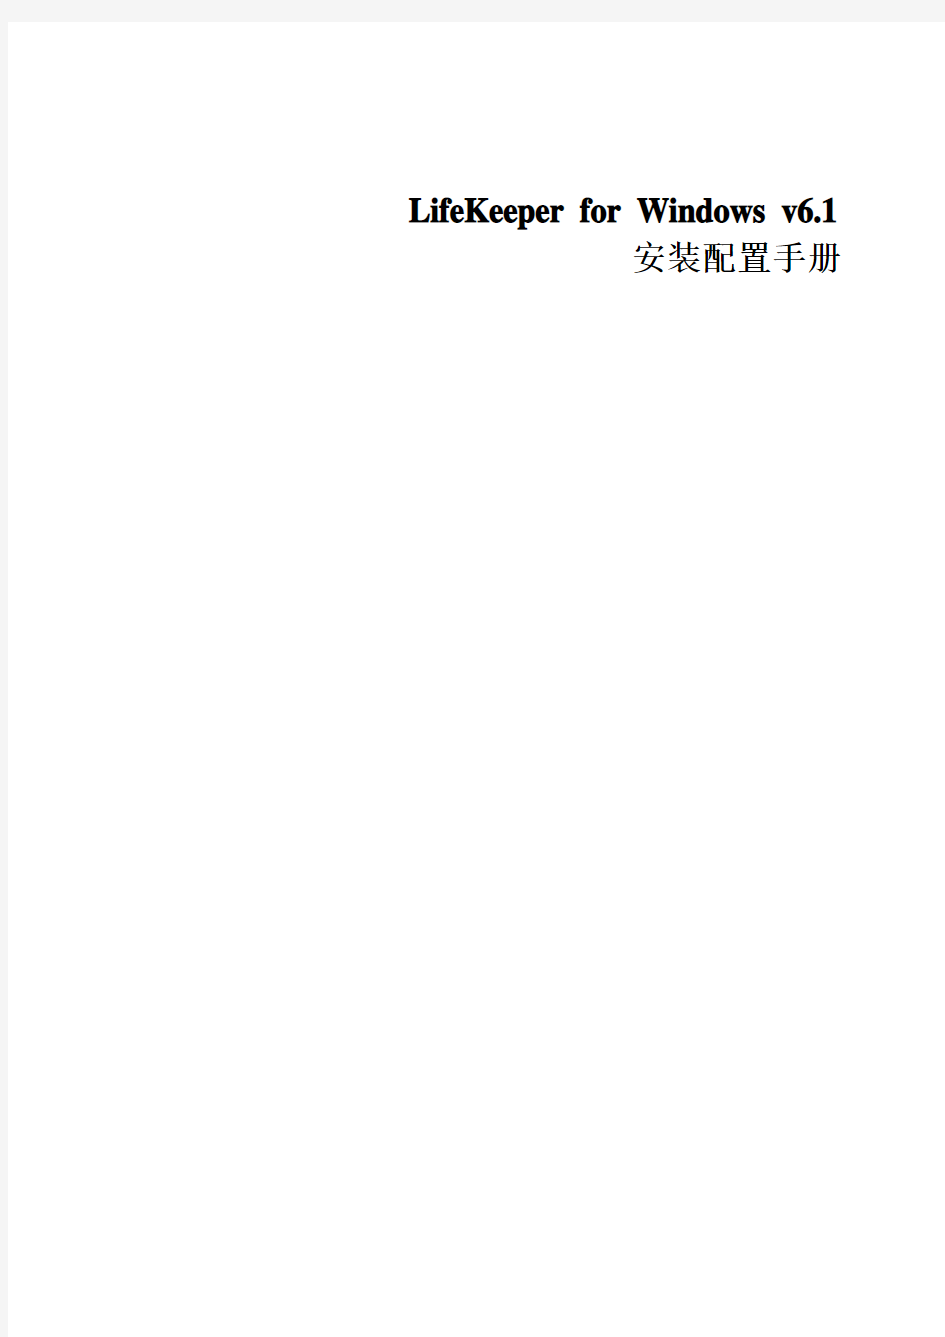 双机热备软件(LifeKeeper)for windows安装配置手册